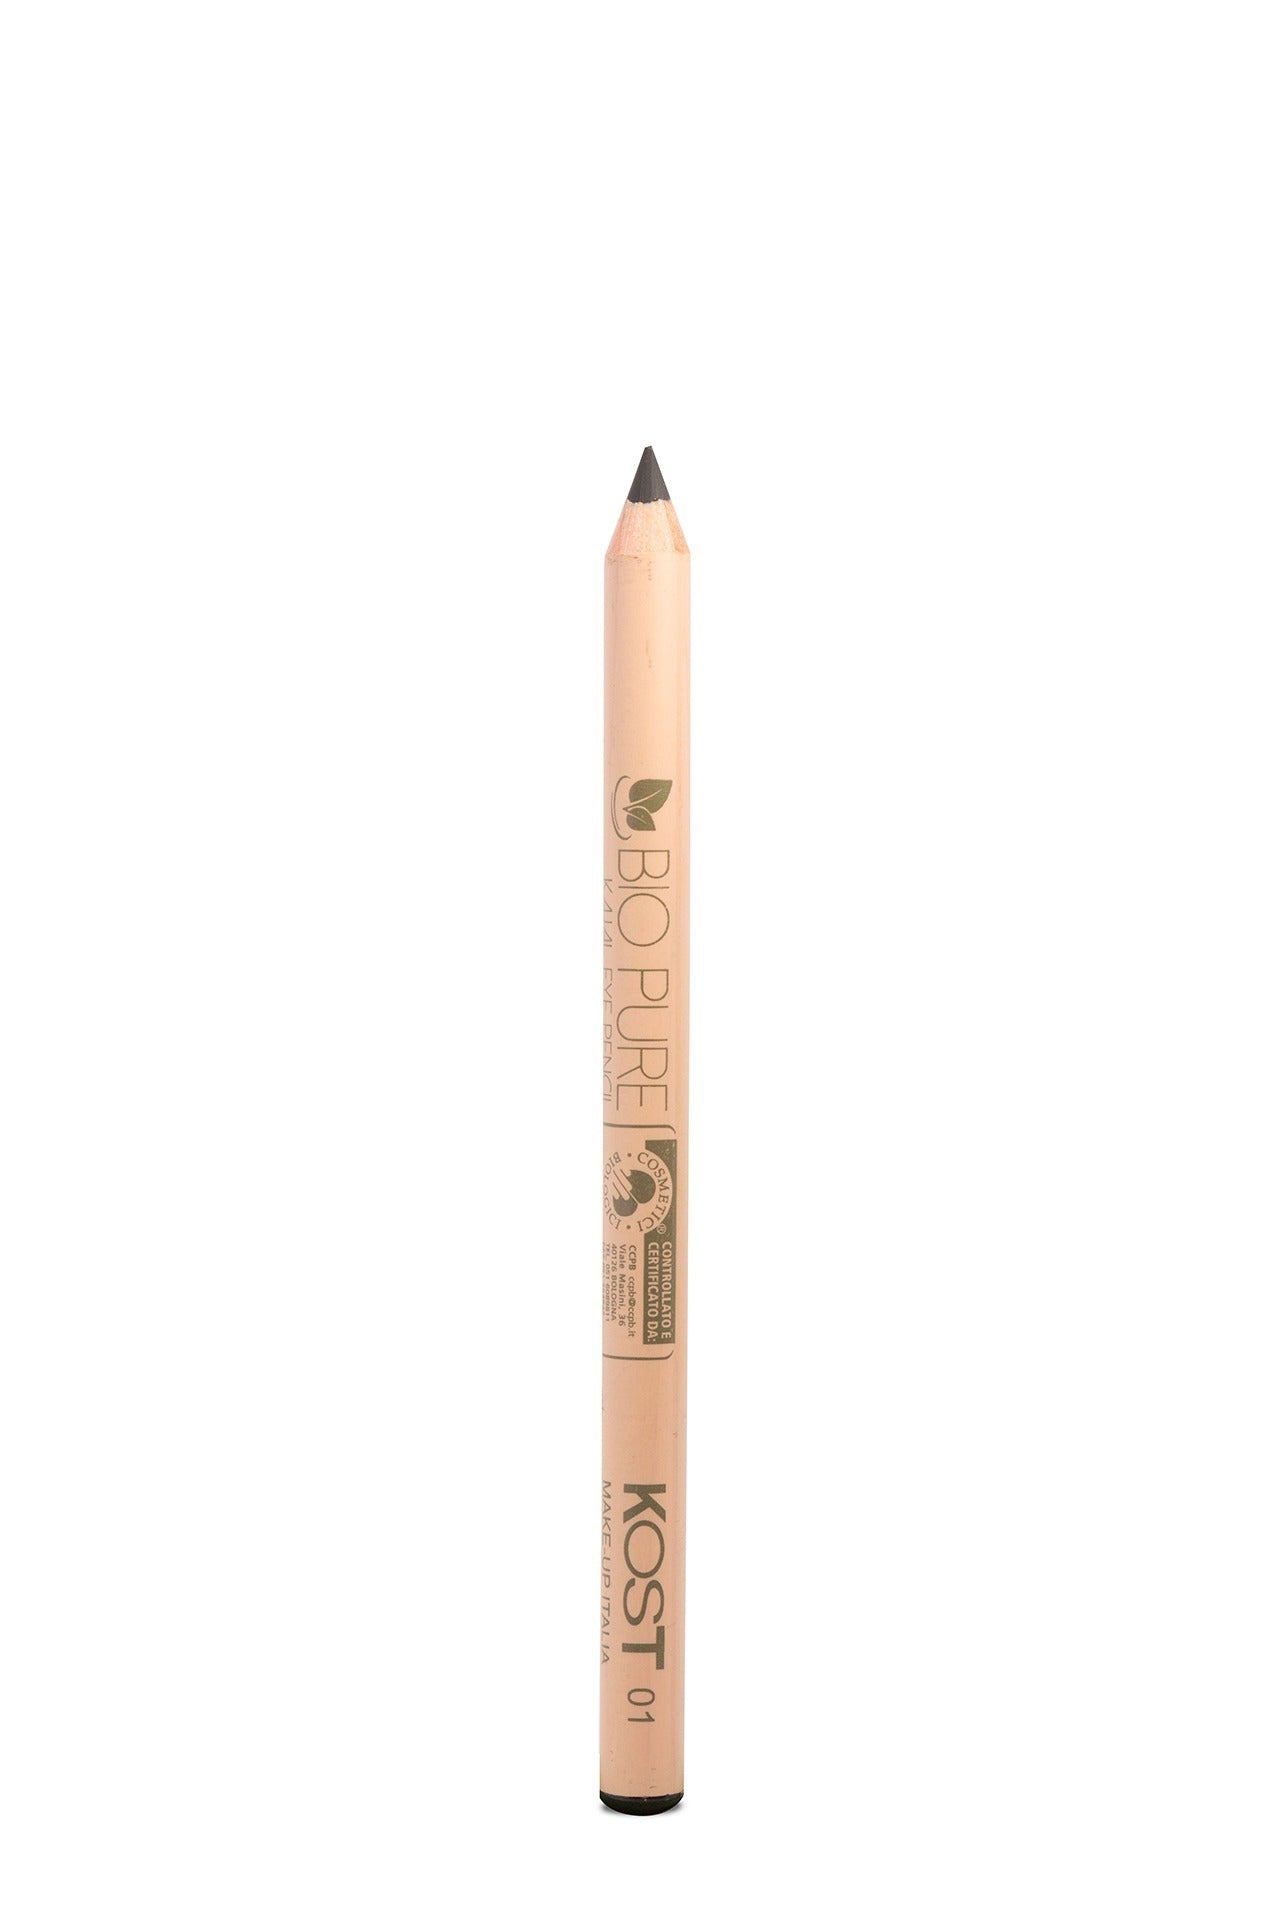 Kost Bio Pure Kajal Eye Pencil - Jasmine Parfums- [ean]